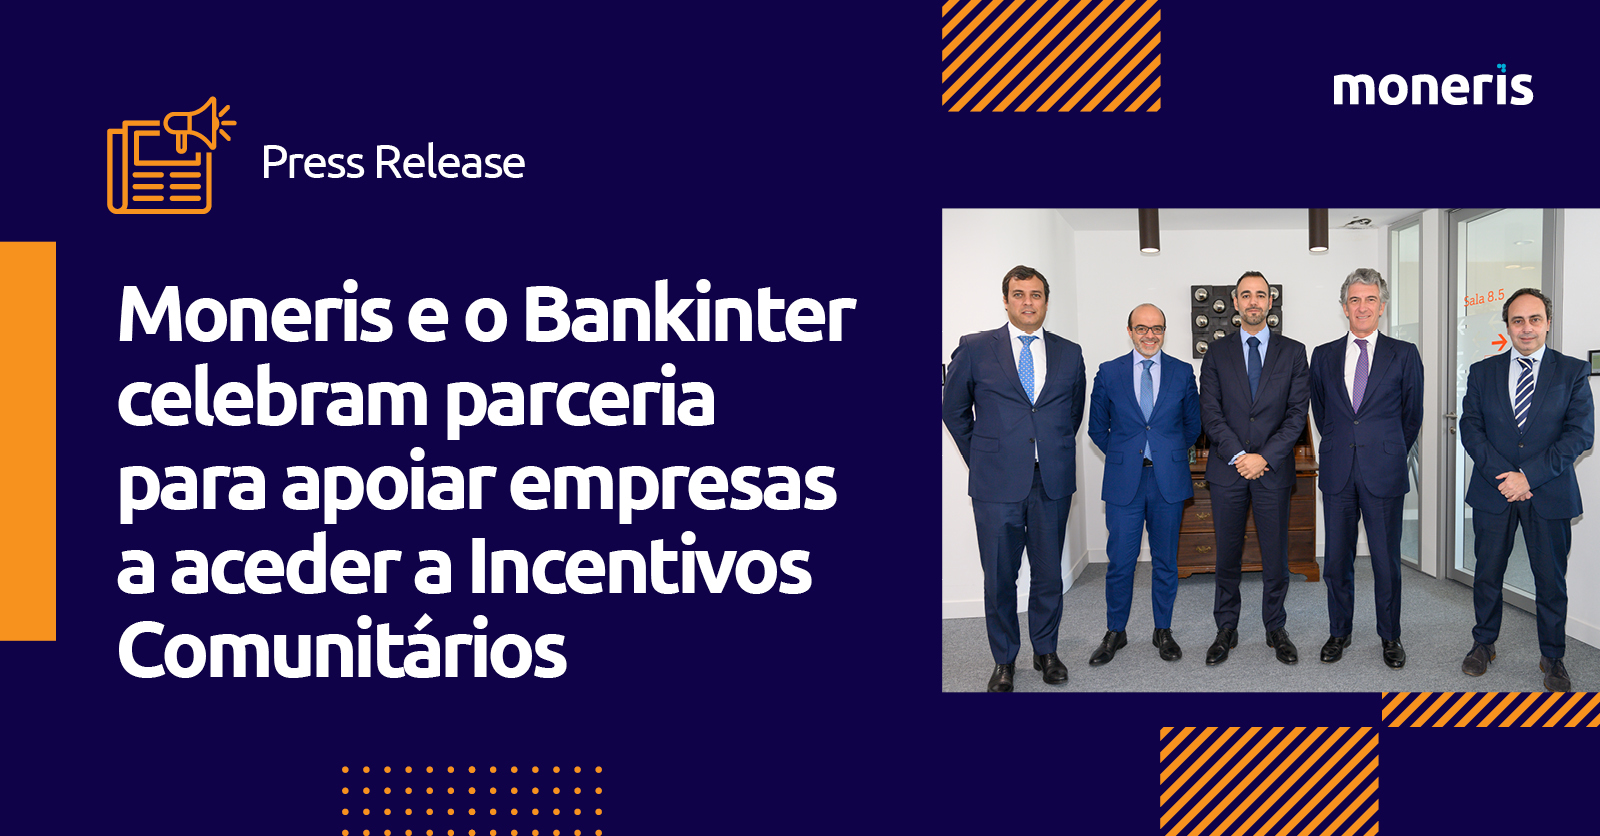 Press Release Moneris Bankinter parceria